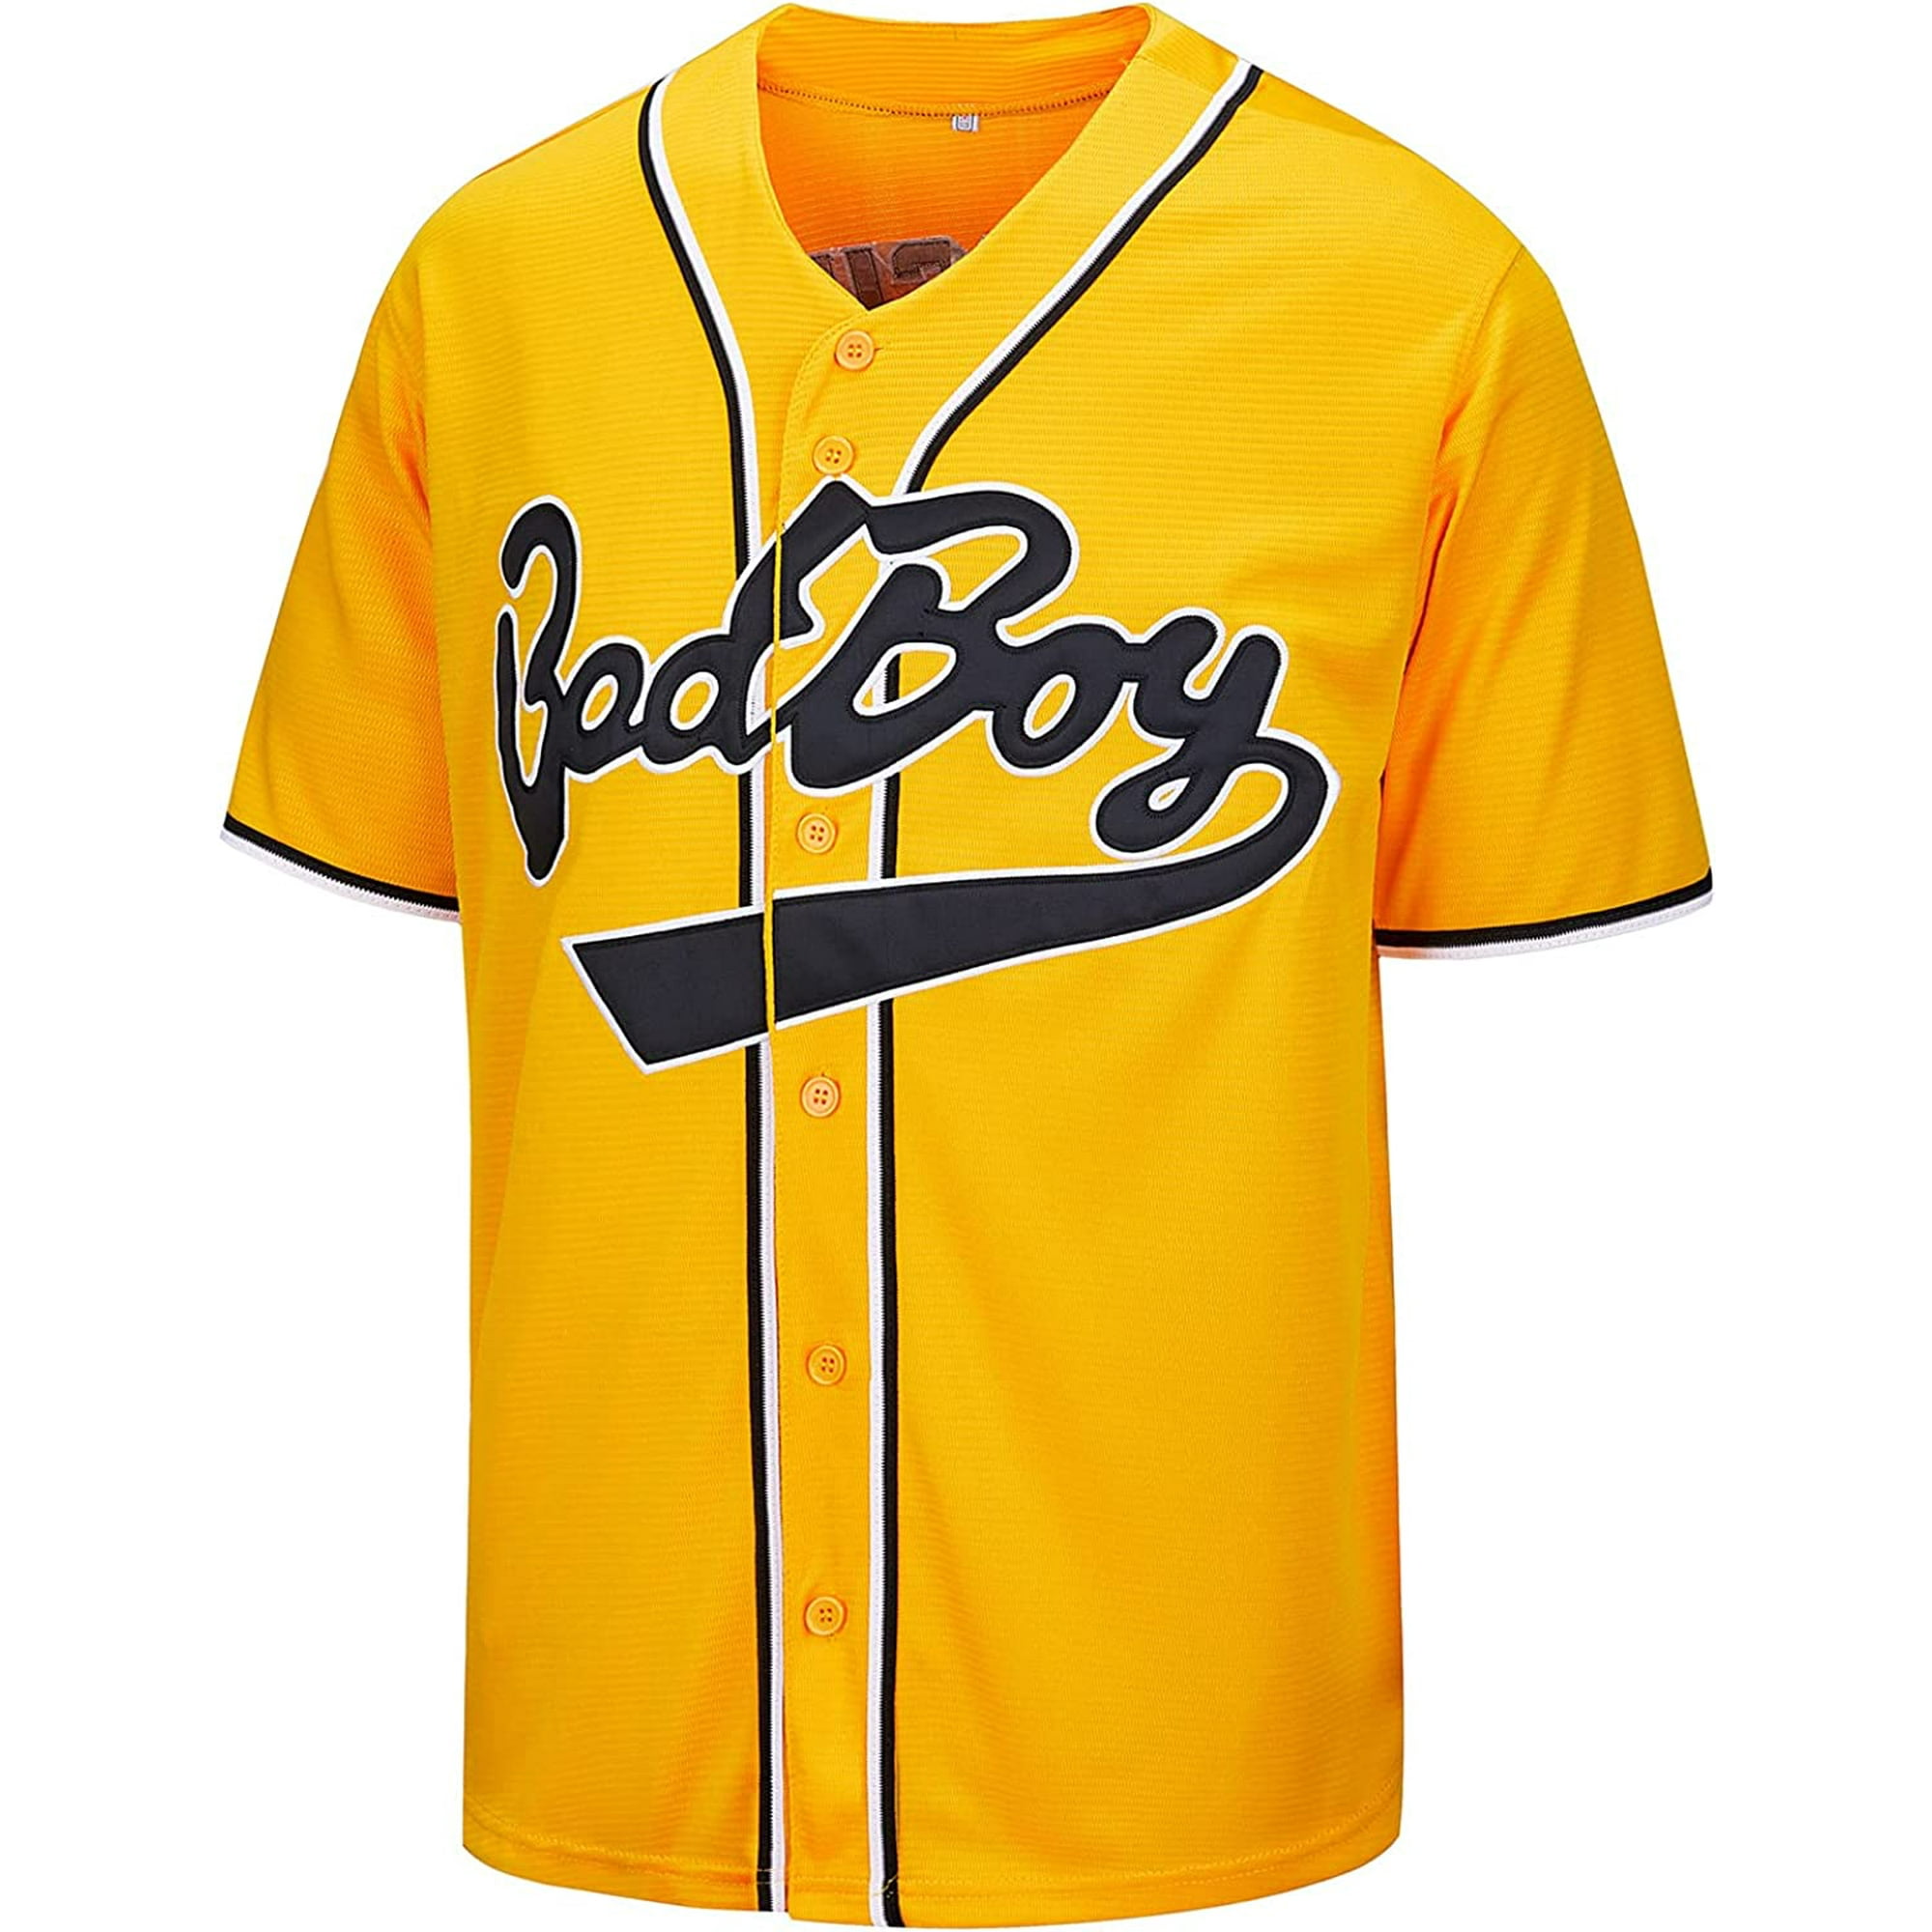 YOUI-GIFTS Bad Boy Baseball Jerseys, 10 Smalls Shirt, 90s Hip Hop Jersey  for Men Women S-XXXL 